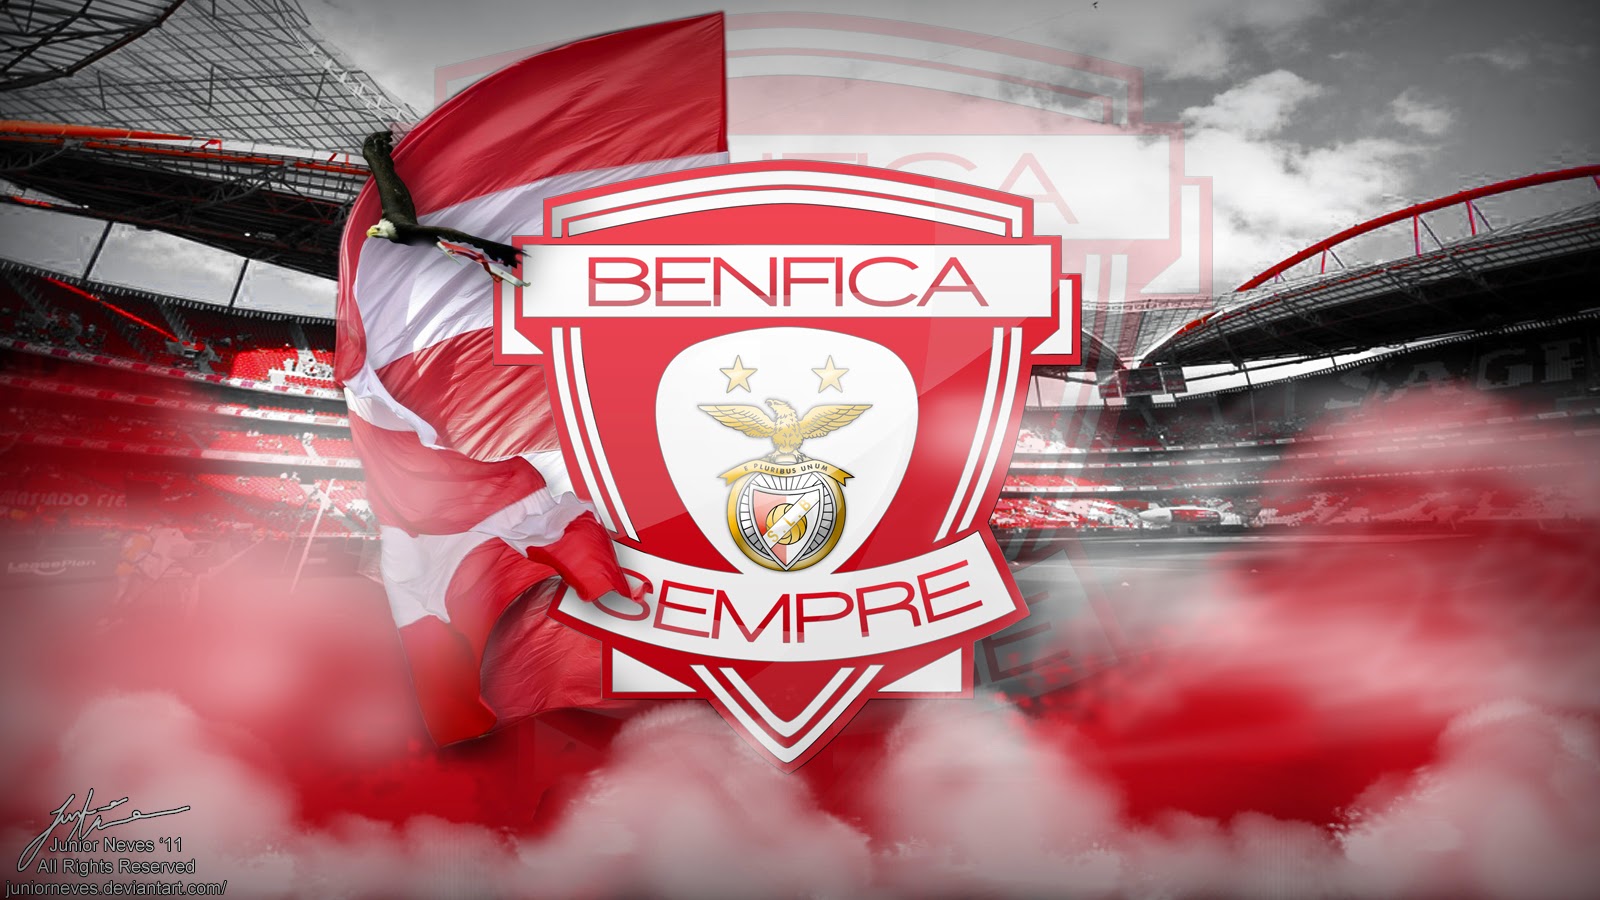 benfica wallpaper,red,emblem,vehicle,logo,car